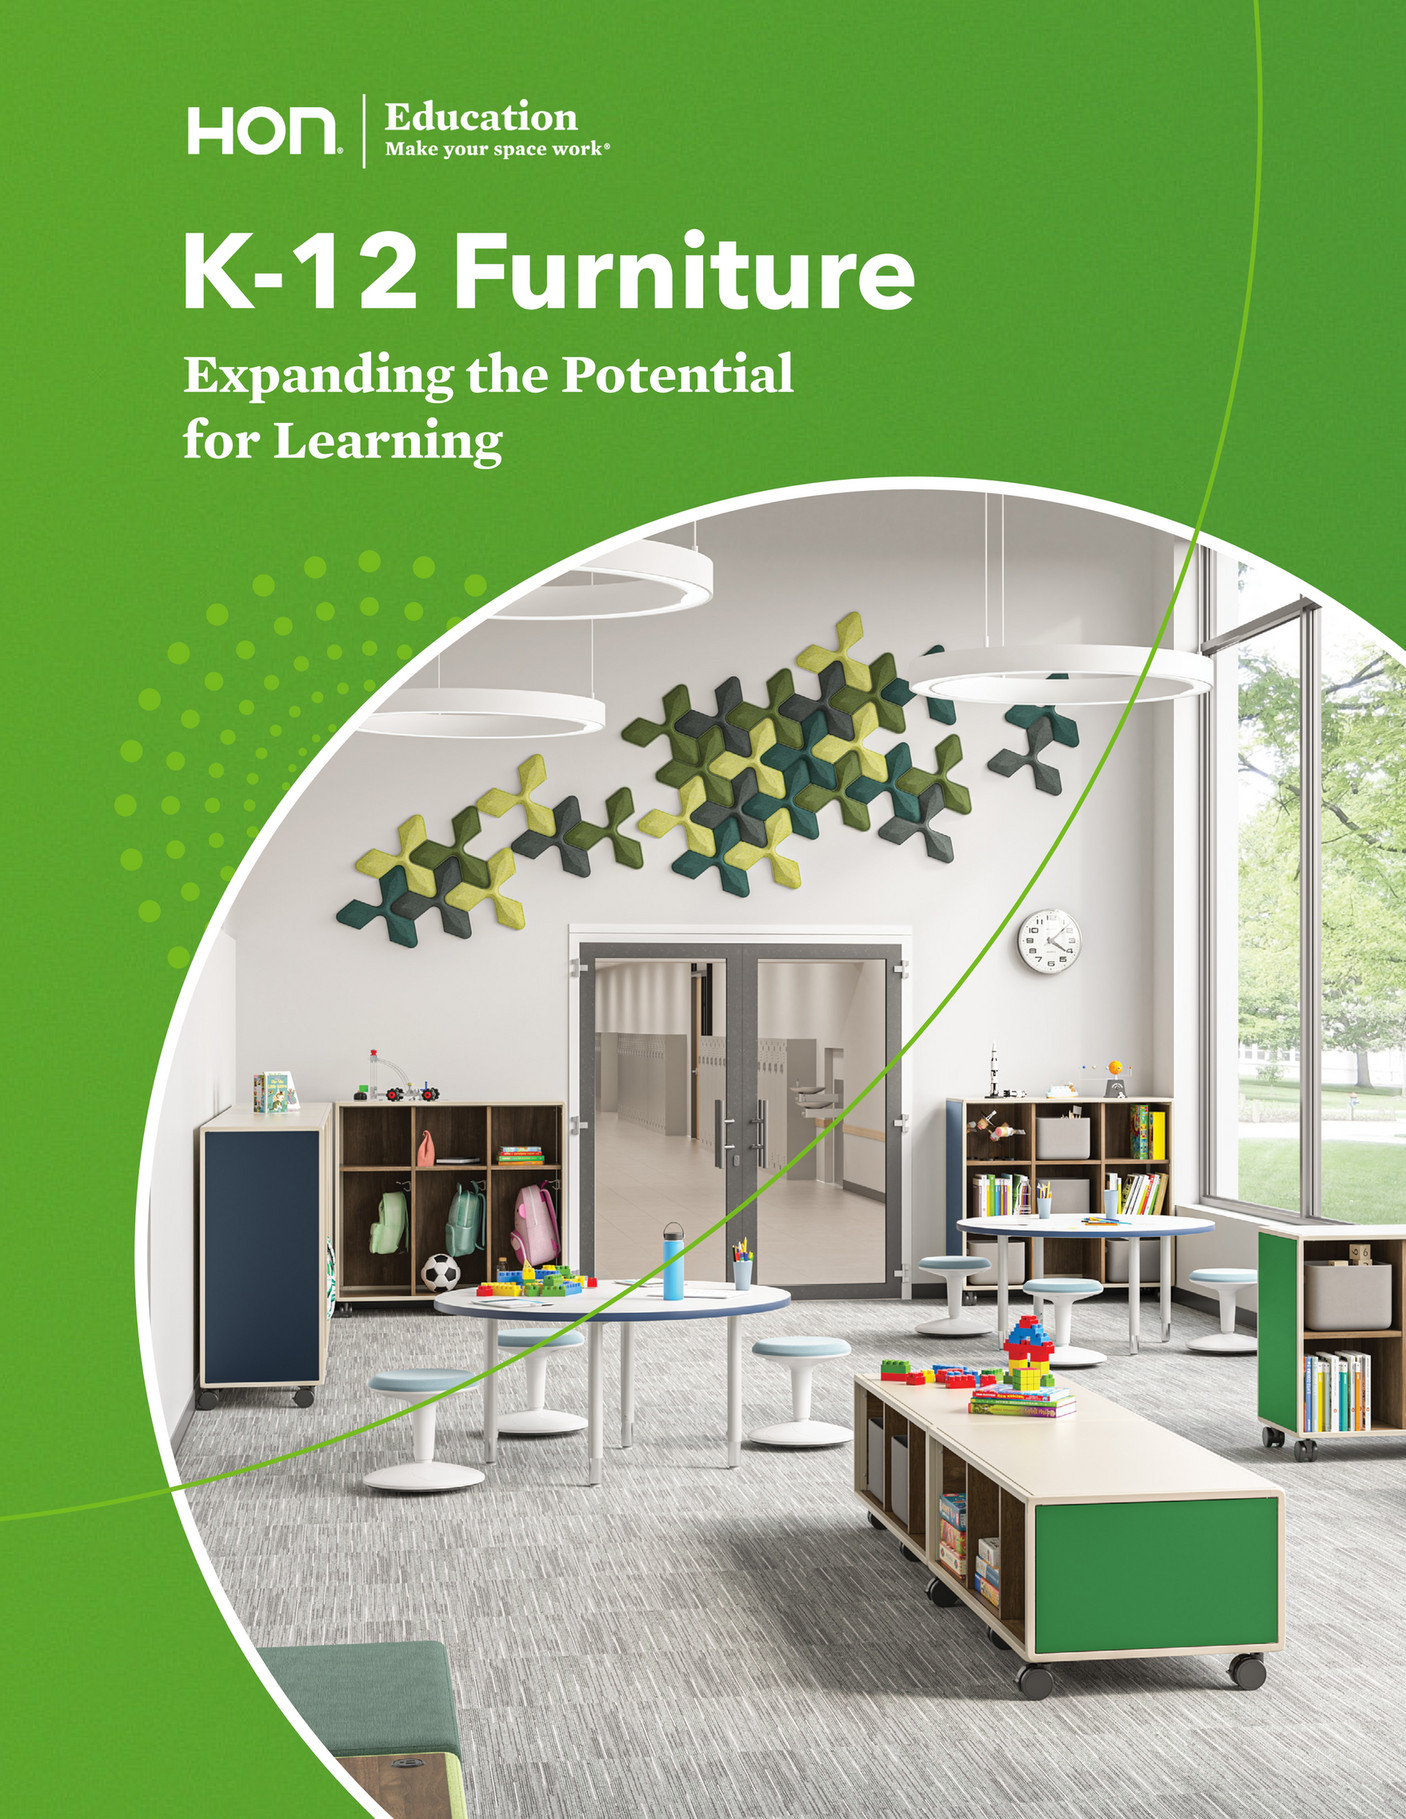 HON EDUCATION K-12 Furniture - Page 56-57